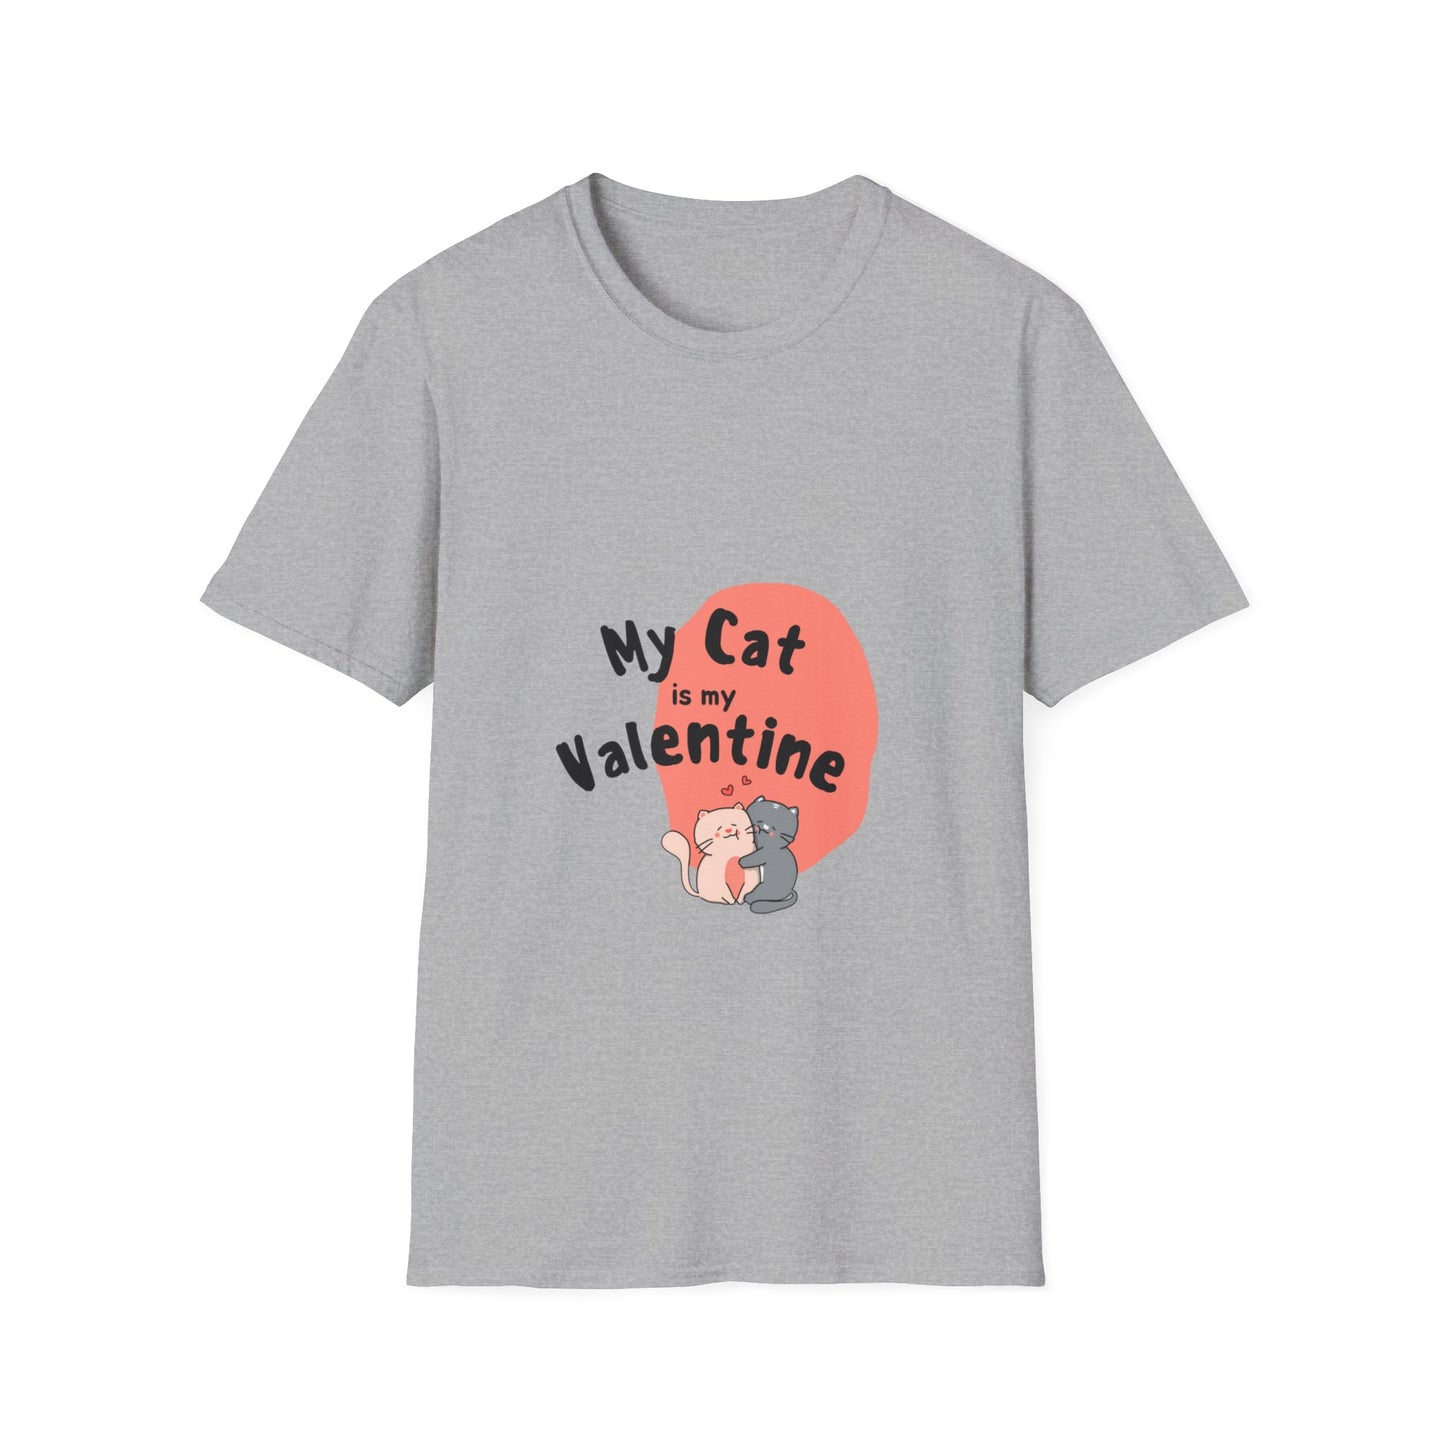 My Cat is My Valentine Shirt!